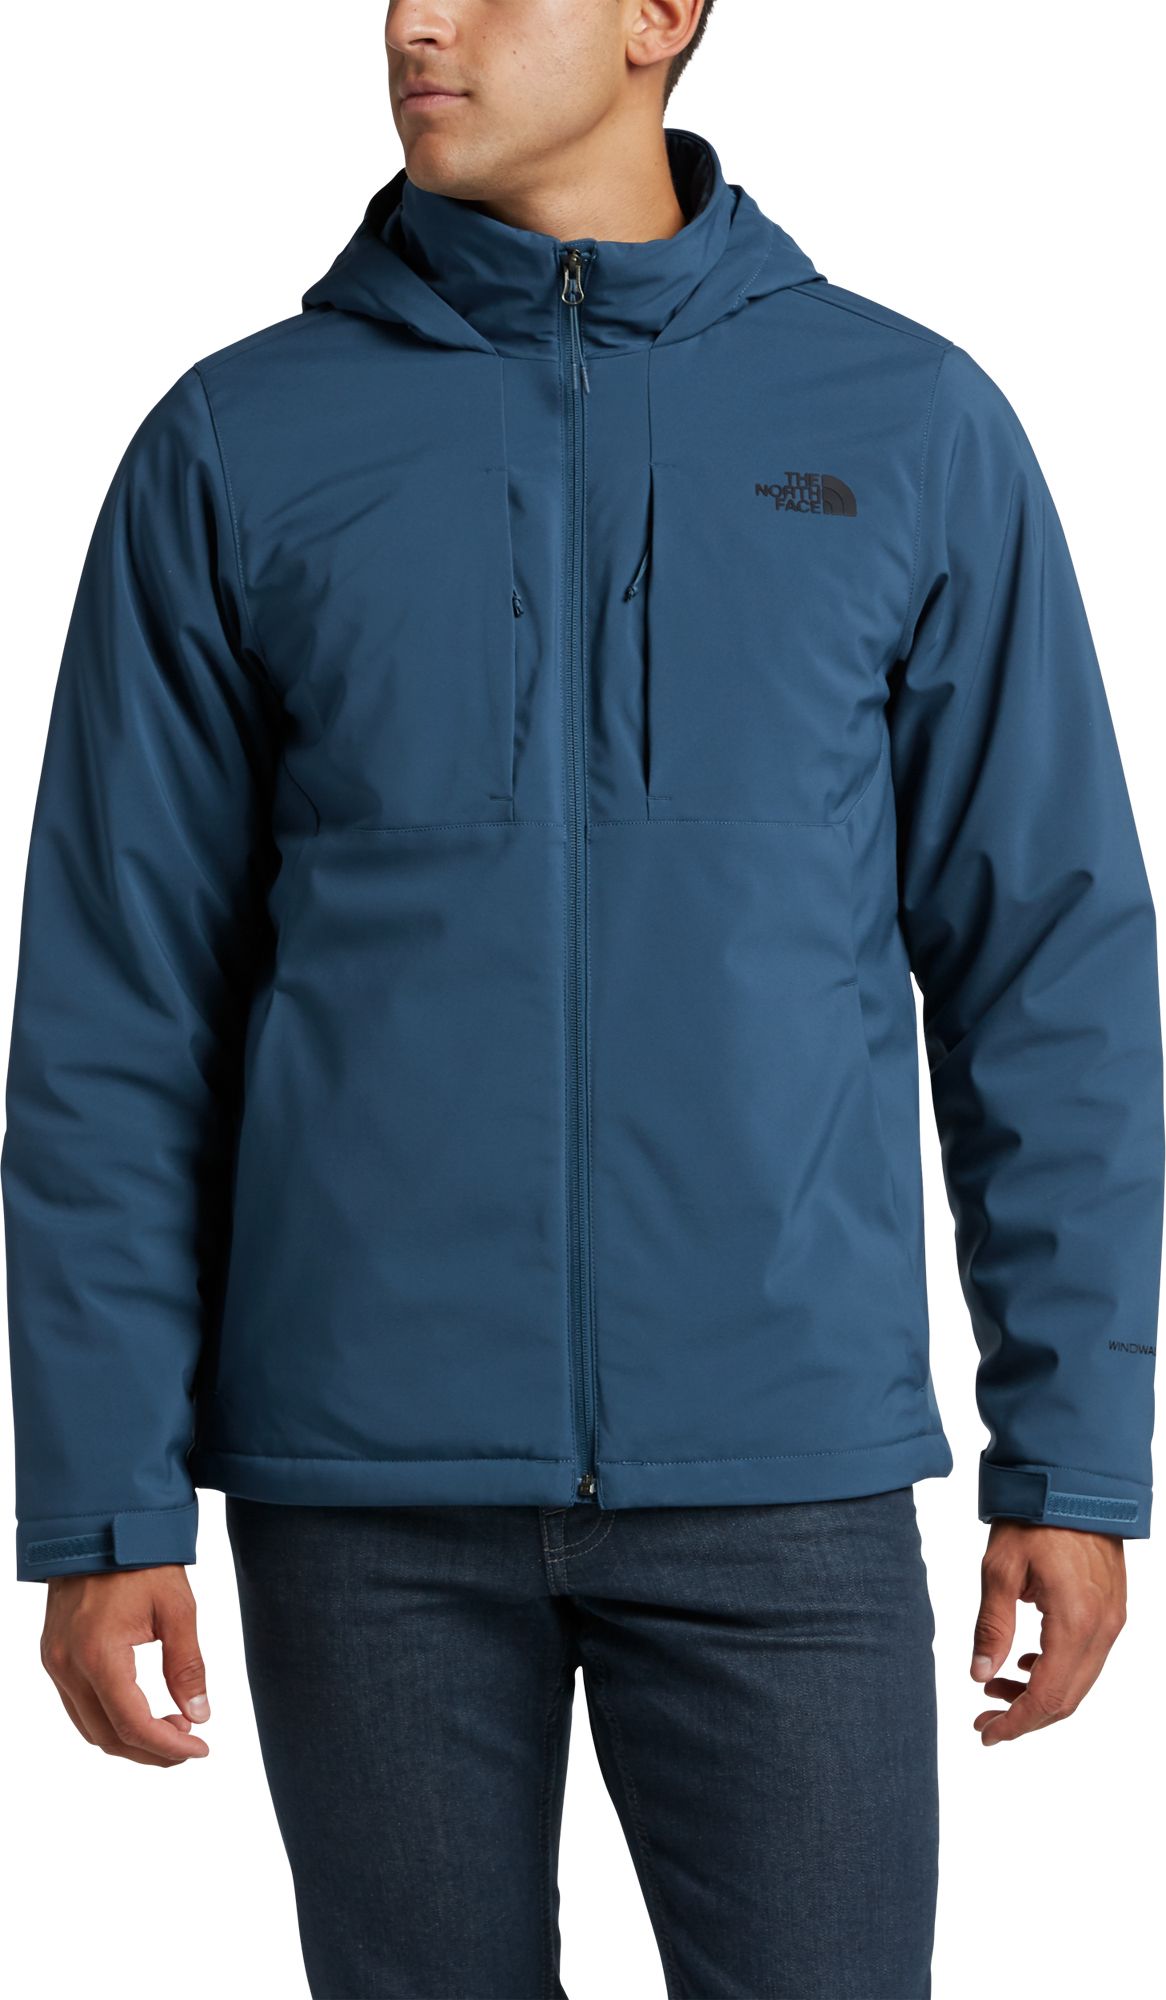 north face elevation jacket